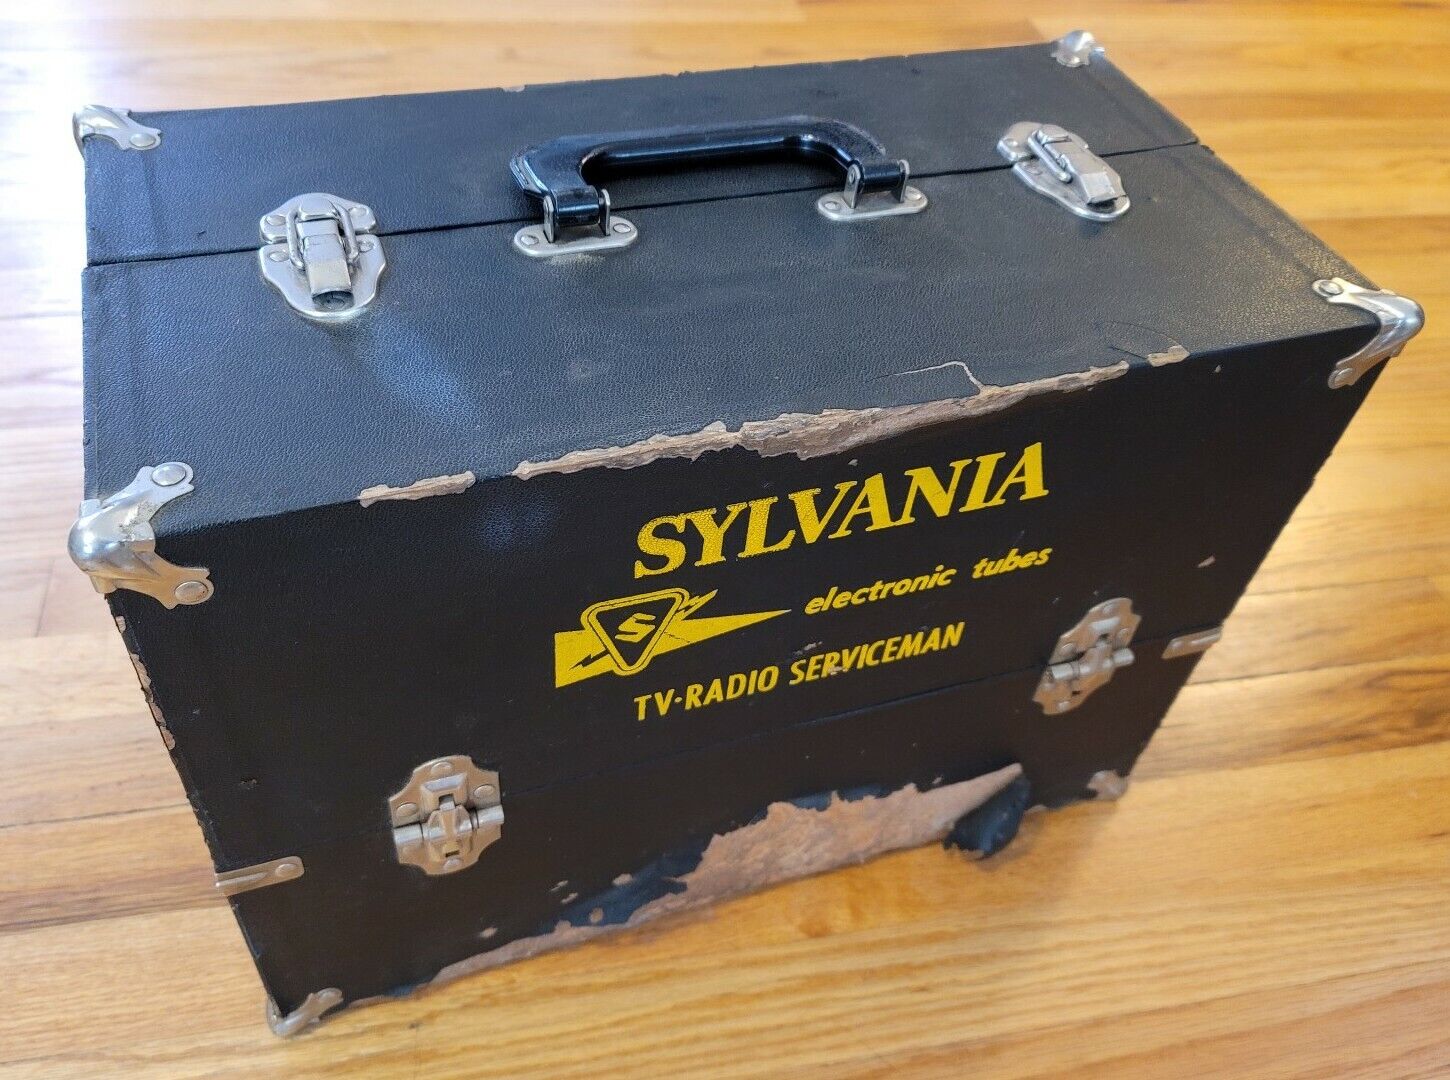 Vintage Sylvania Vacuum Electronic Tube TV Radio Serviceman Carrying Case Rare 